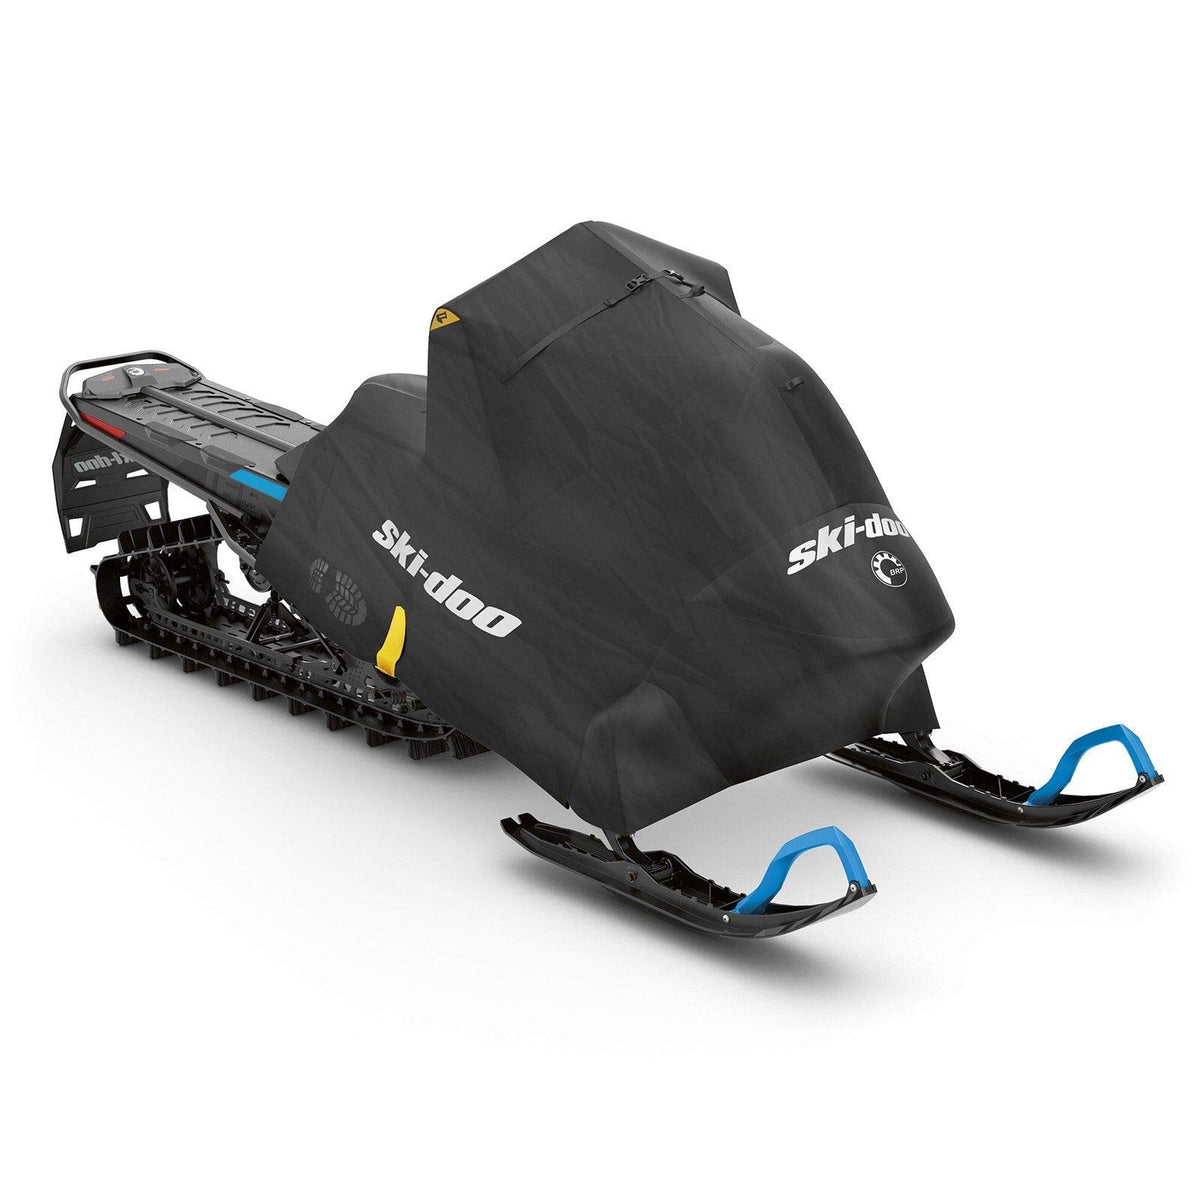 Ski-Doo Ride On Cover (ROC) System - REV Gen4 (Wide) Grand Touring Ltd 860201887